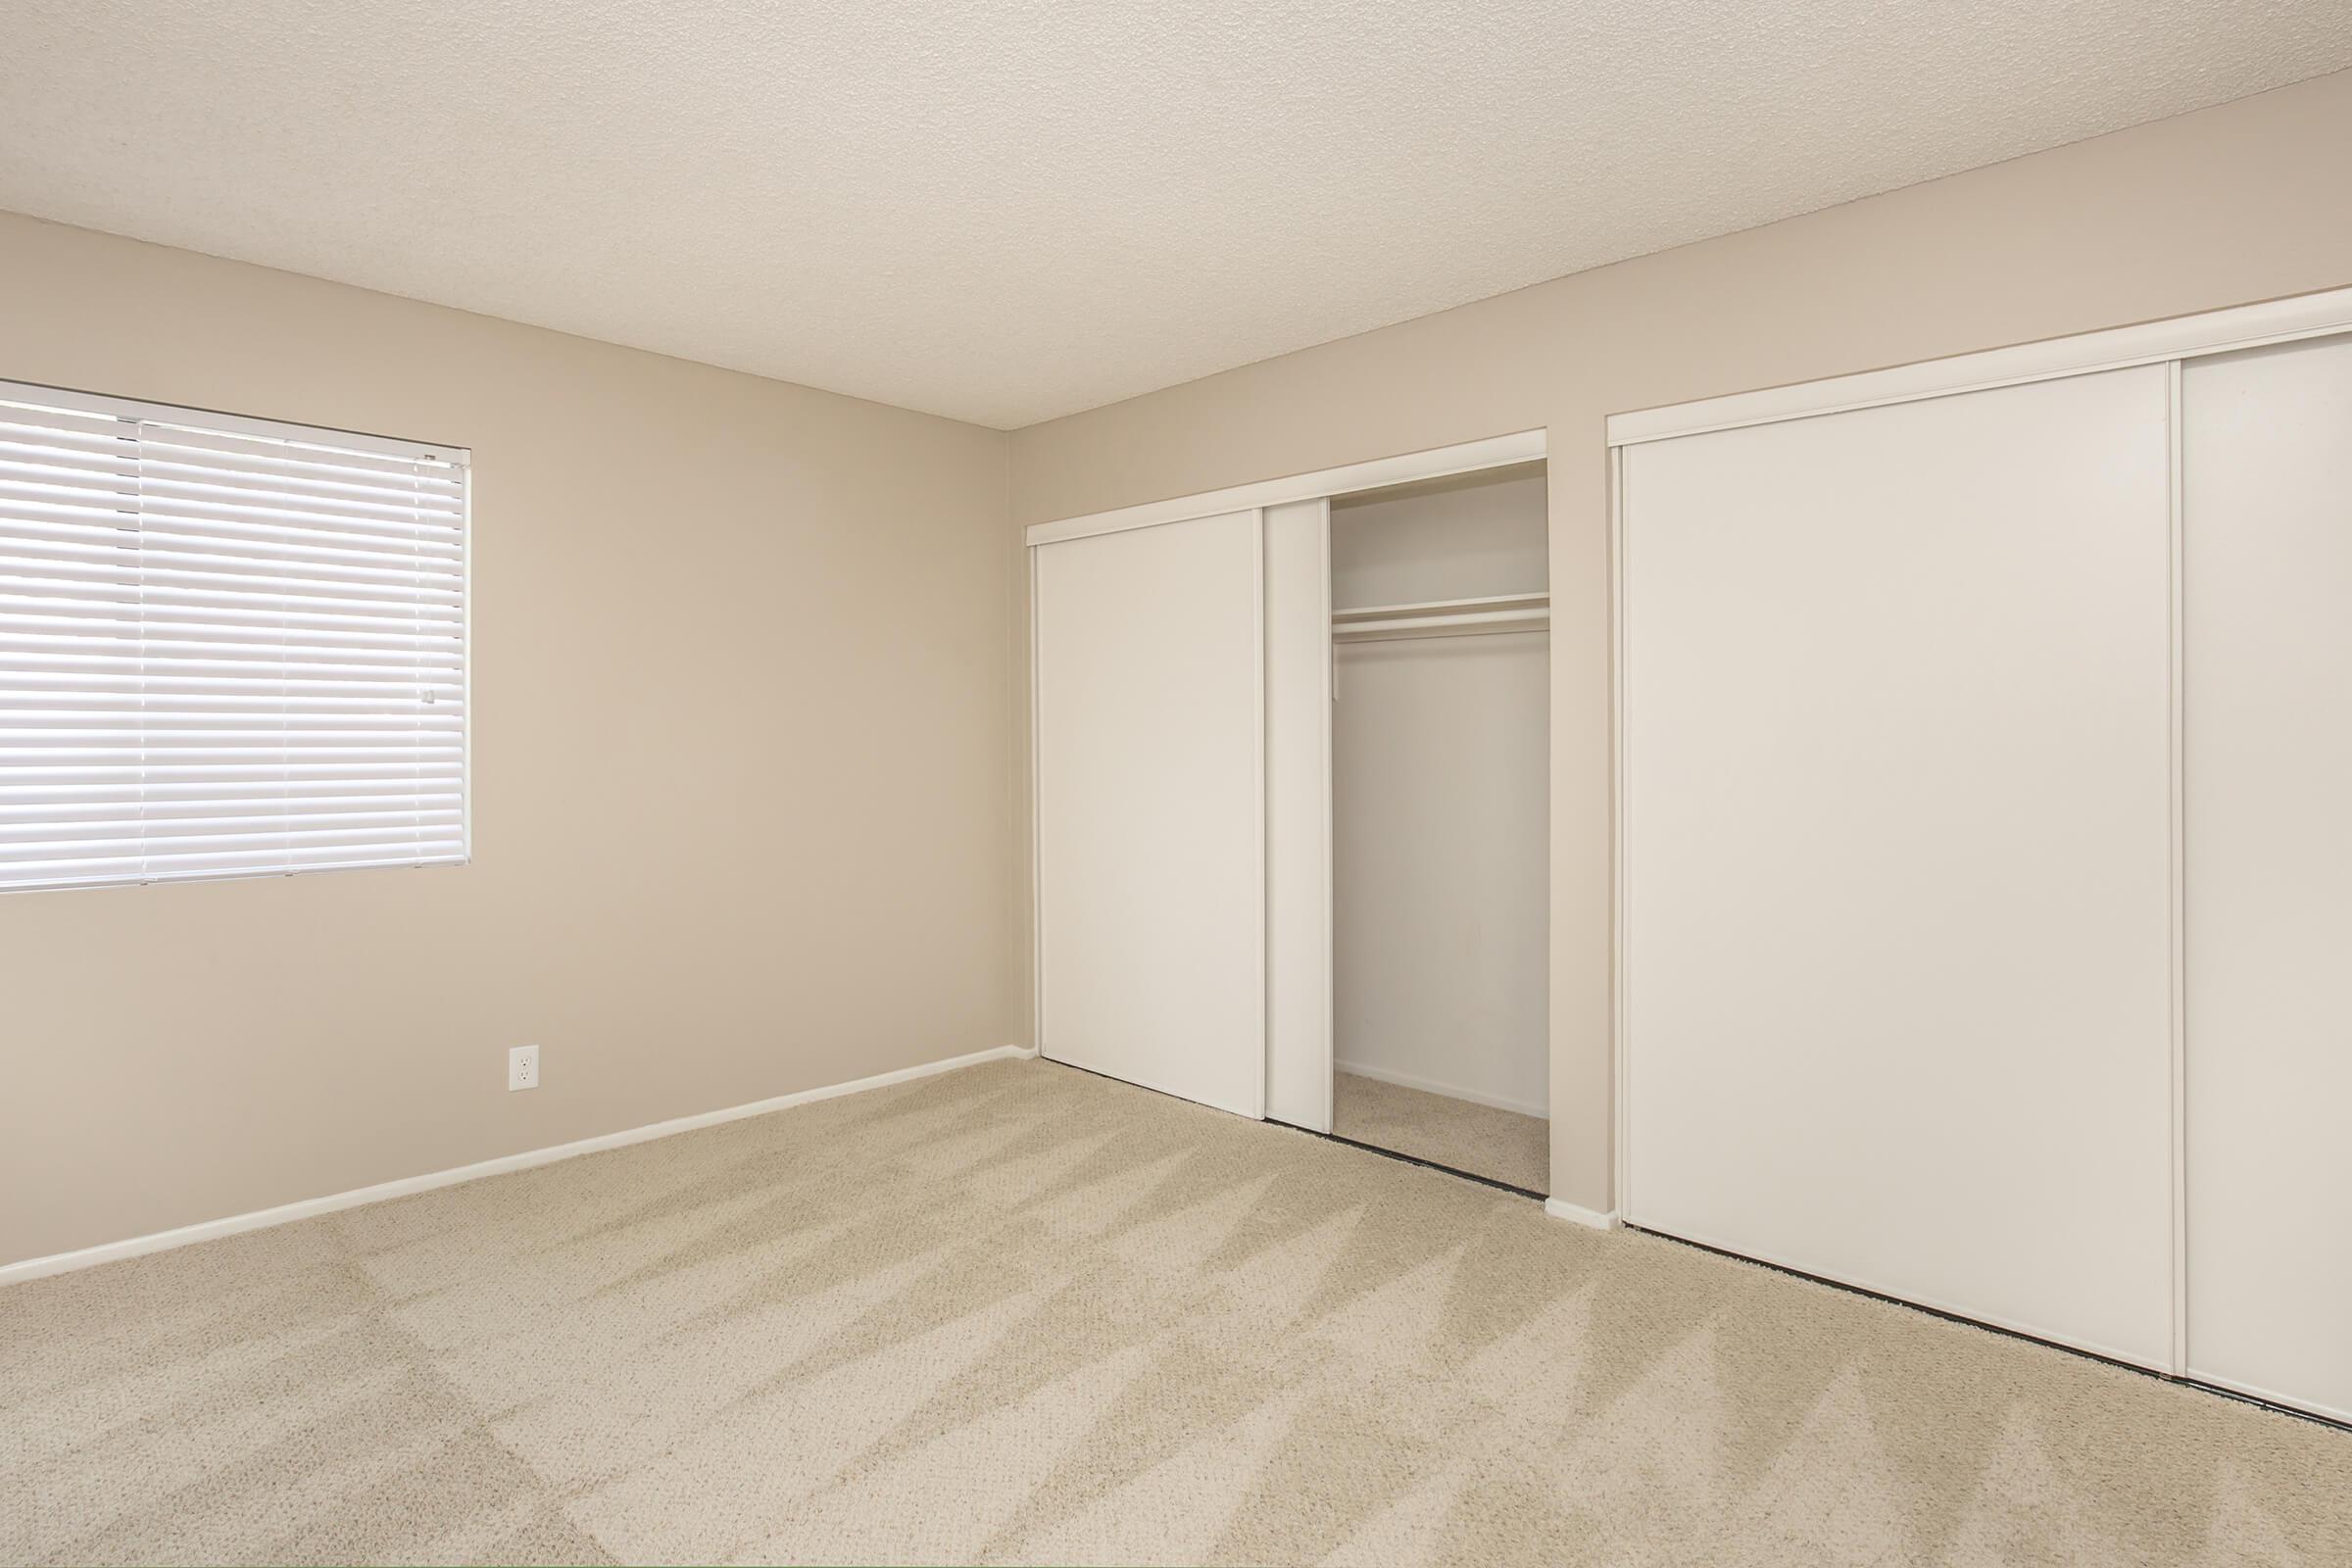 Unfurnished bedroom with open sliding closet doors